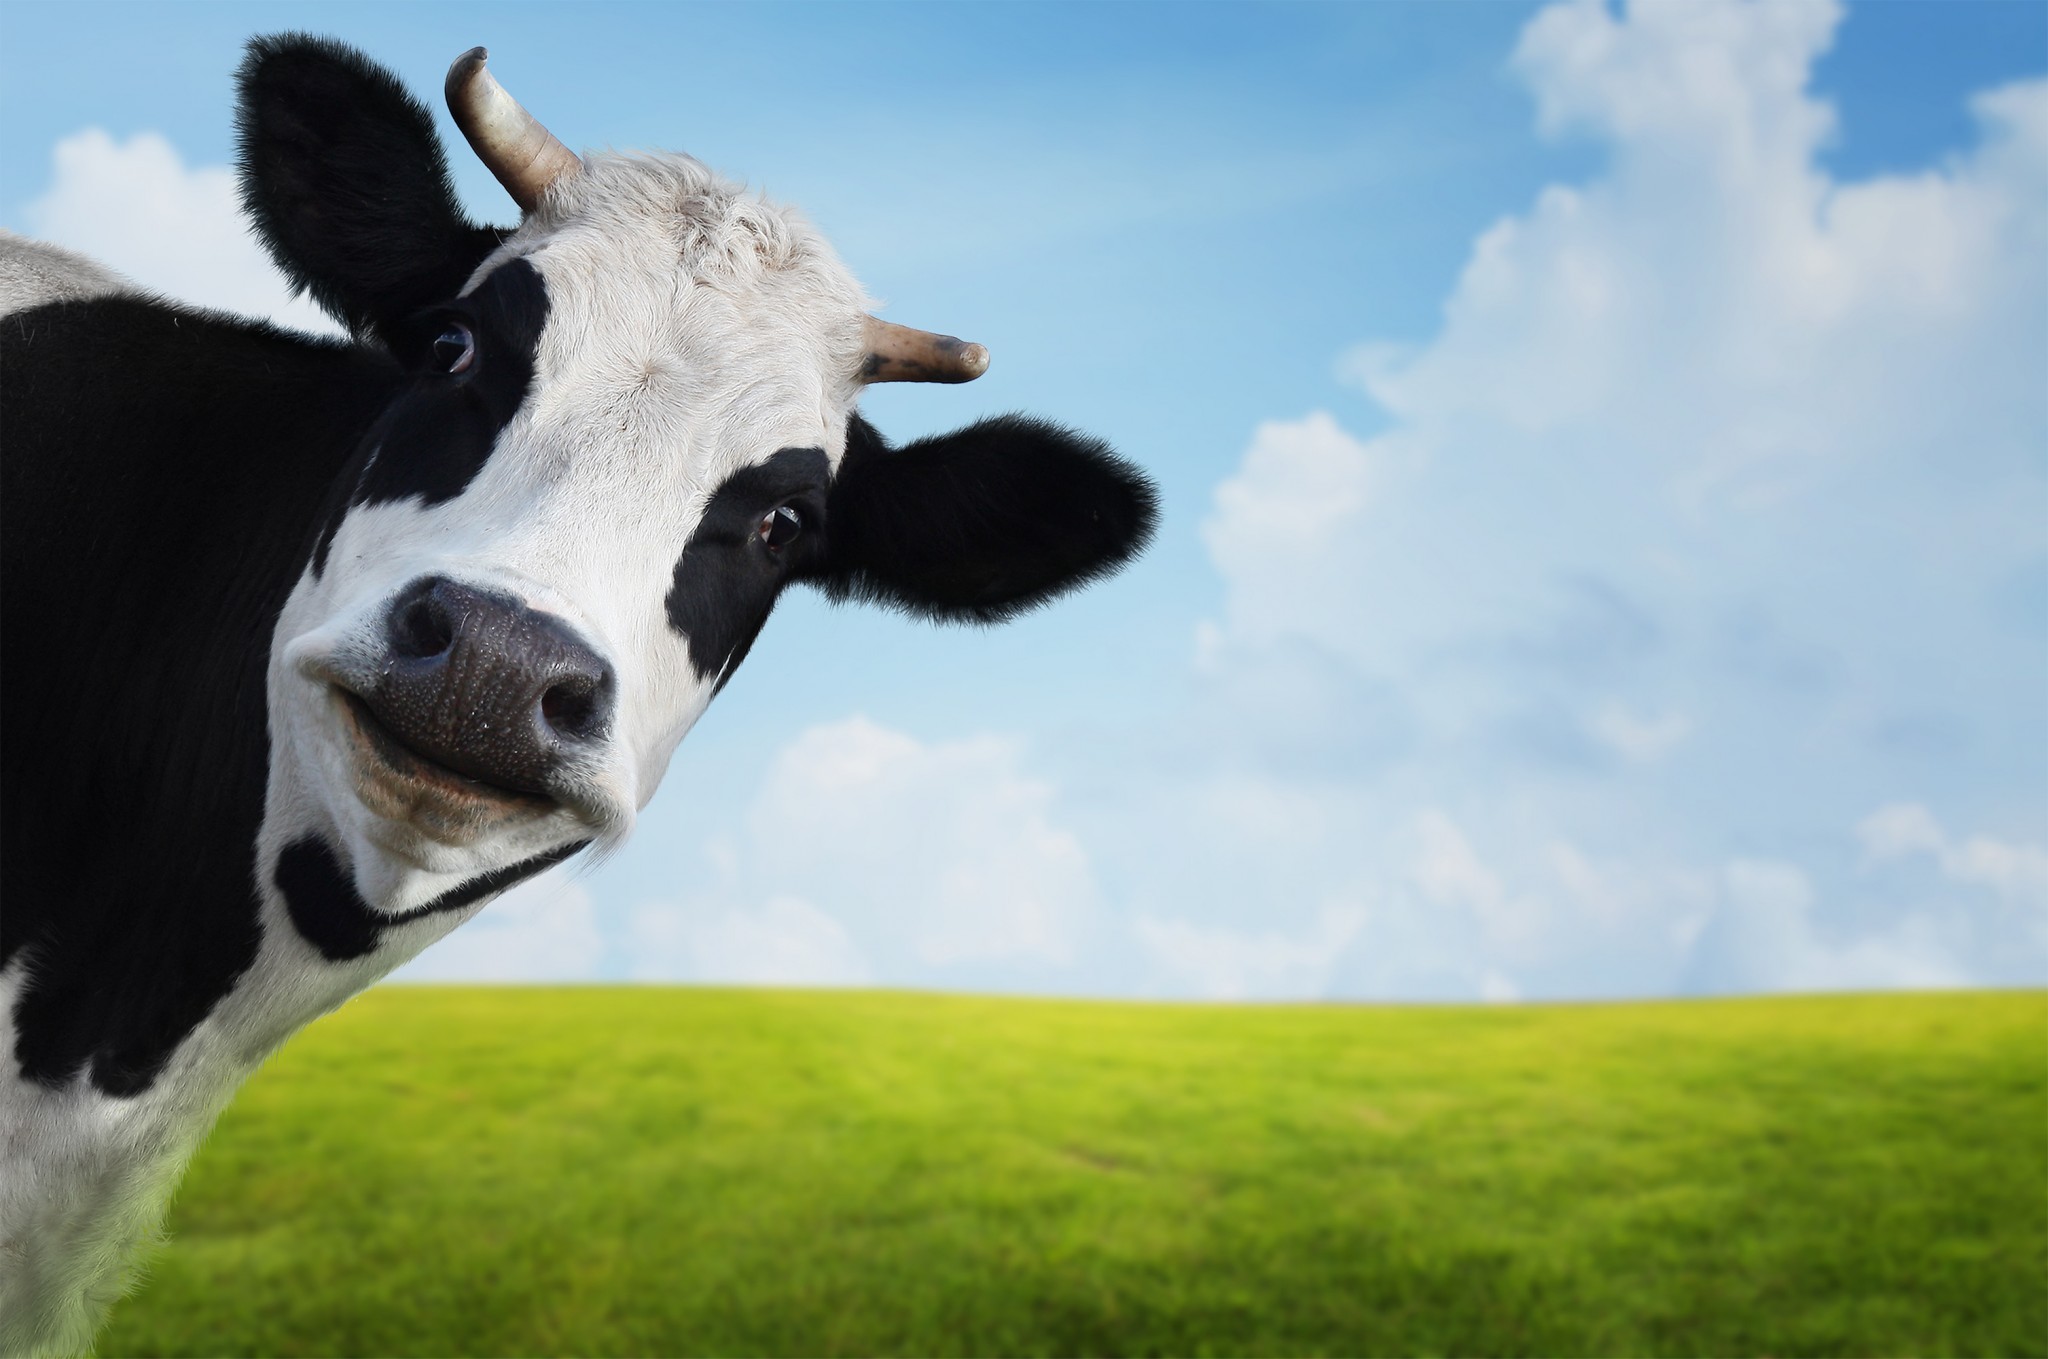 economic news roundup and bovine bingo insurance